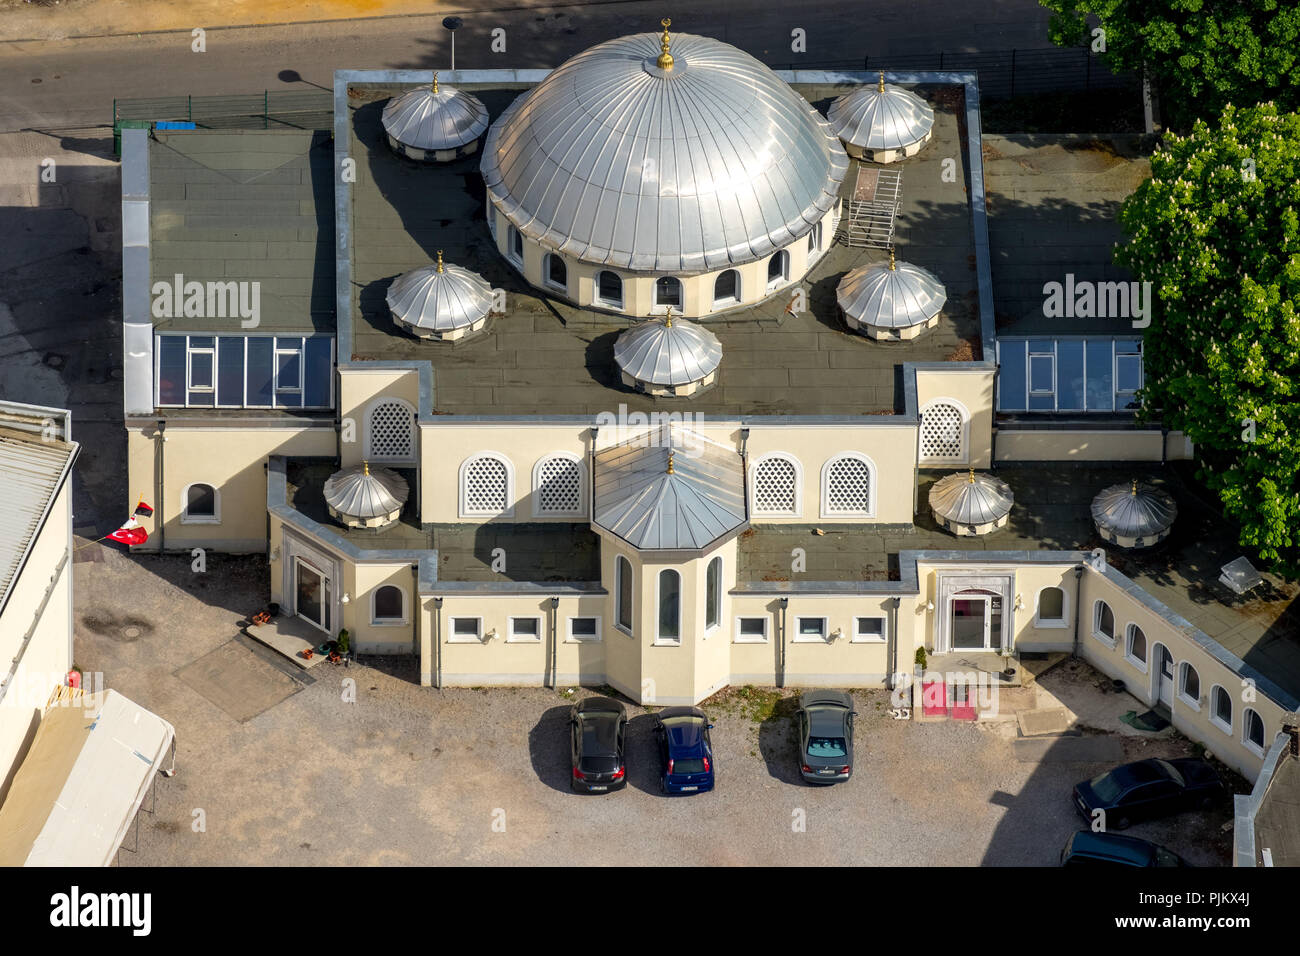 DITIB-Turkish Islamic community Hagen-Hohenlimburg eV, Kronenburgstraße, Hohenlimburg, Hagen, Ruhr area, North Rhine-Westphalia, Germany Stock Photo